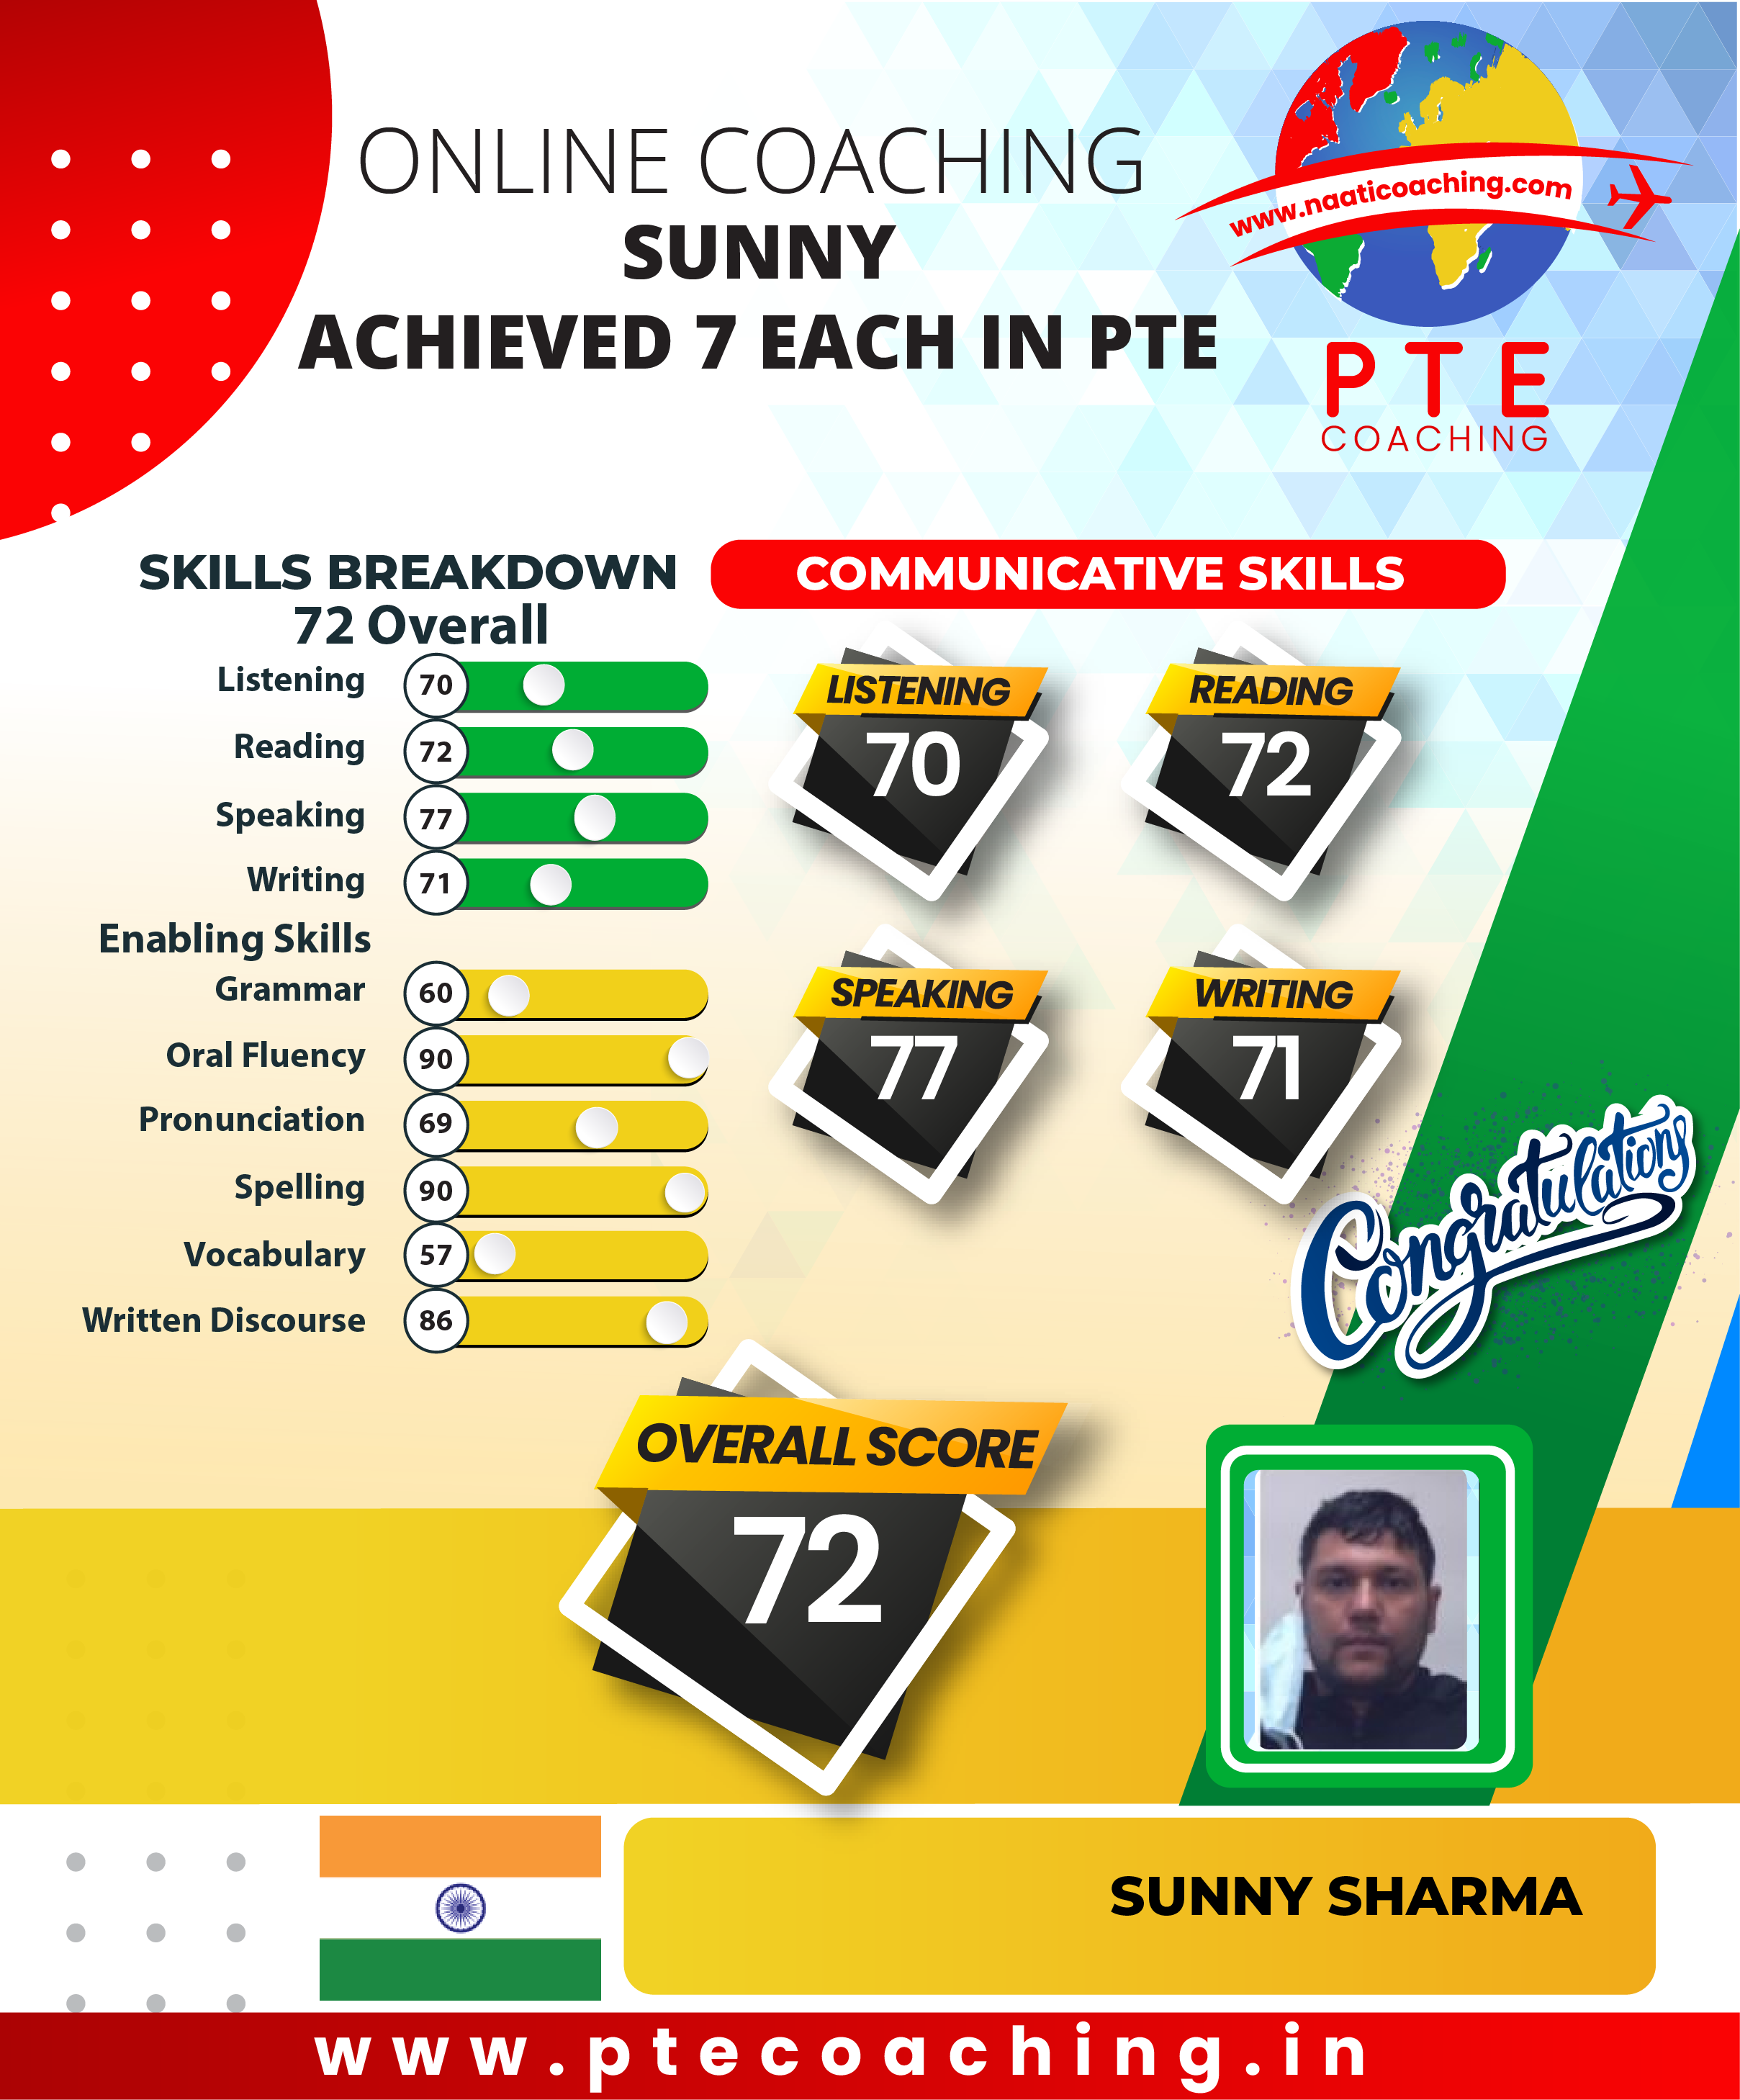 PTE Coaching Scorecard - Sunny achieved 7 each in PTE